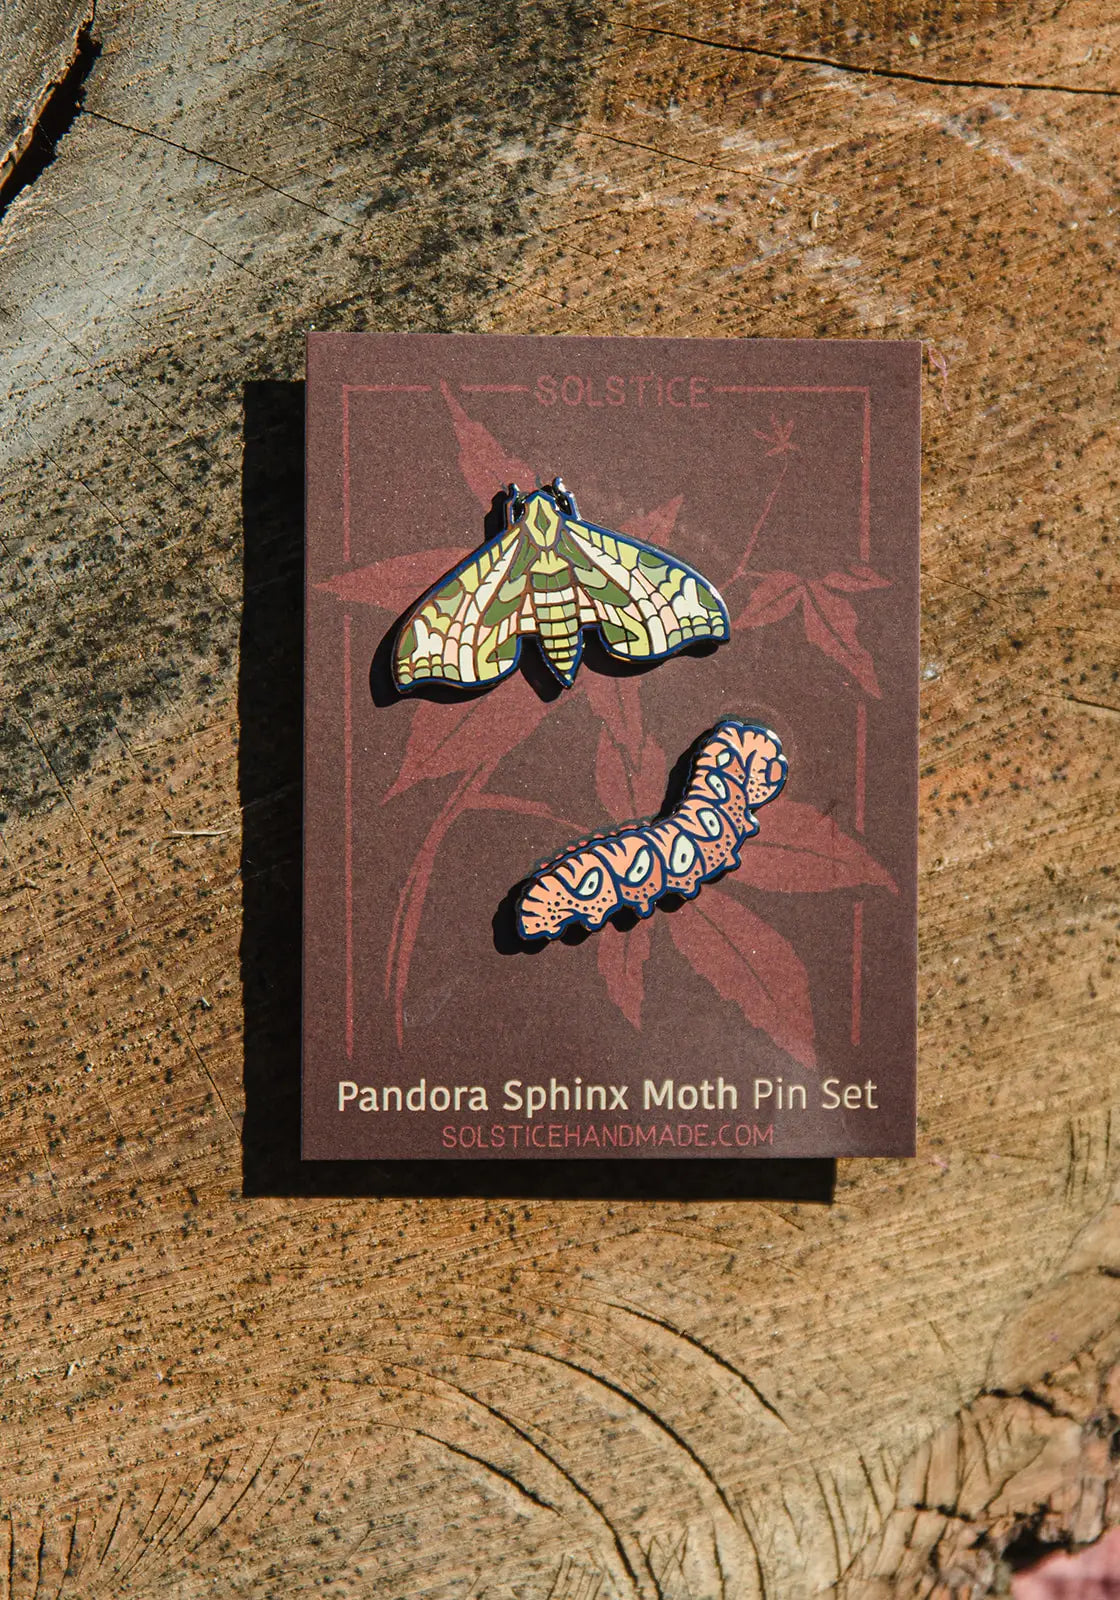 Pandora Sphinx Moth Pin Set